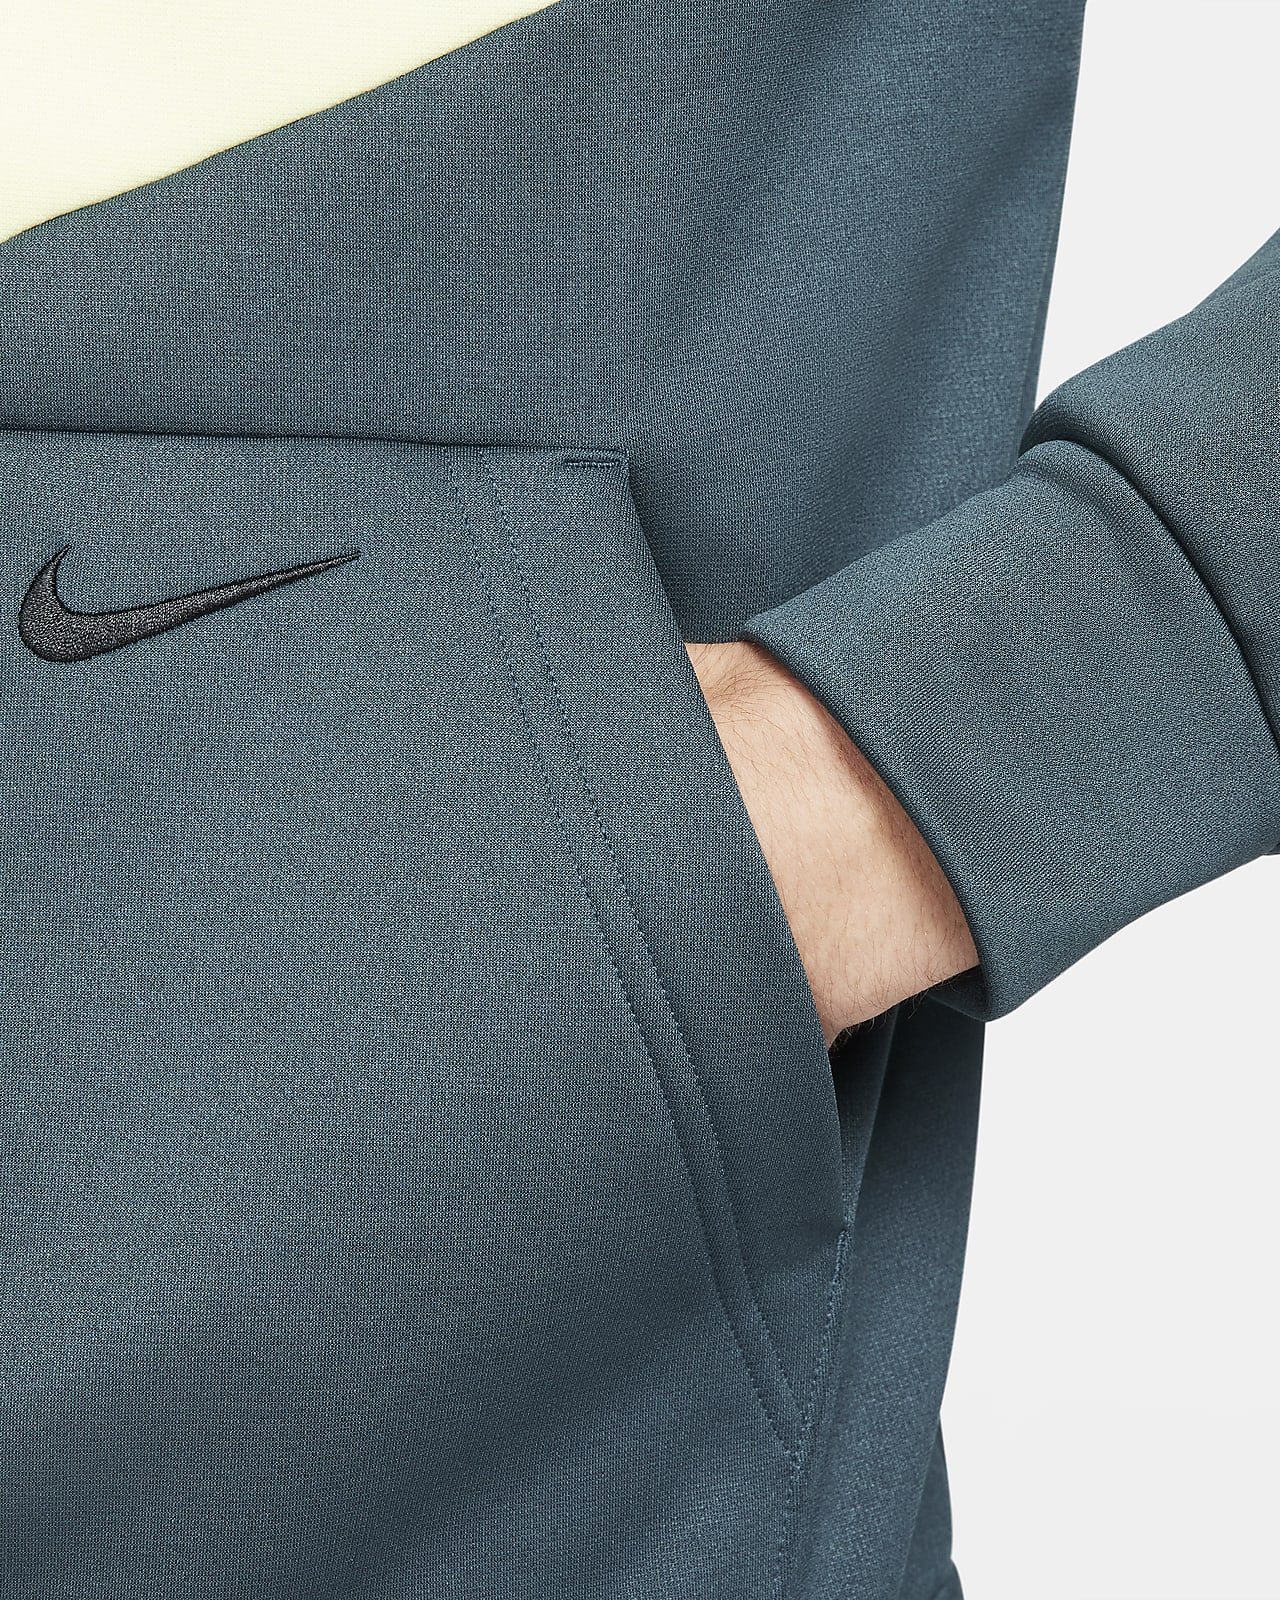 Nike Men's Therma Dri-fit Pullover Hoodie (Sundown/College Navy